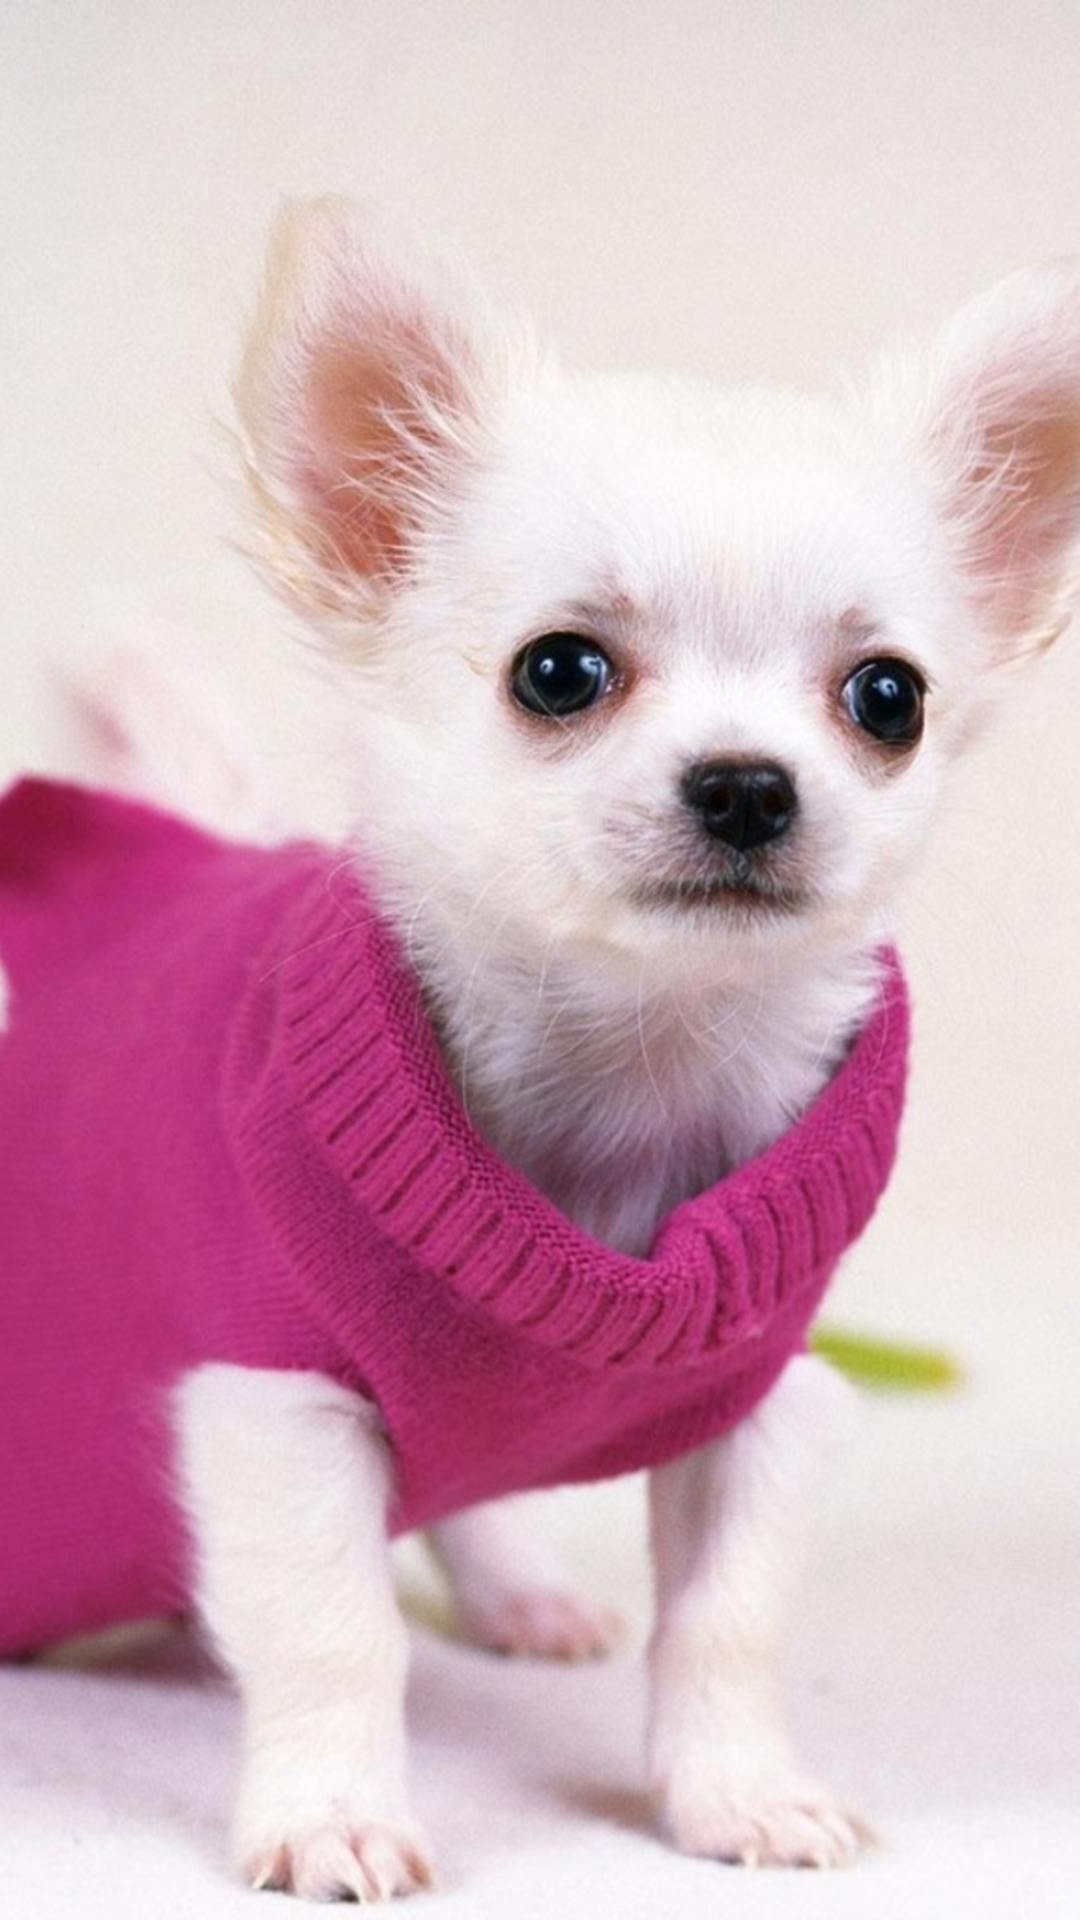 Cute-Pretty-Dog-In-Red-Sweater-iPhone-6-wallpaper.